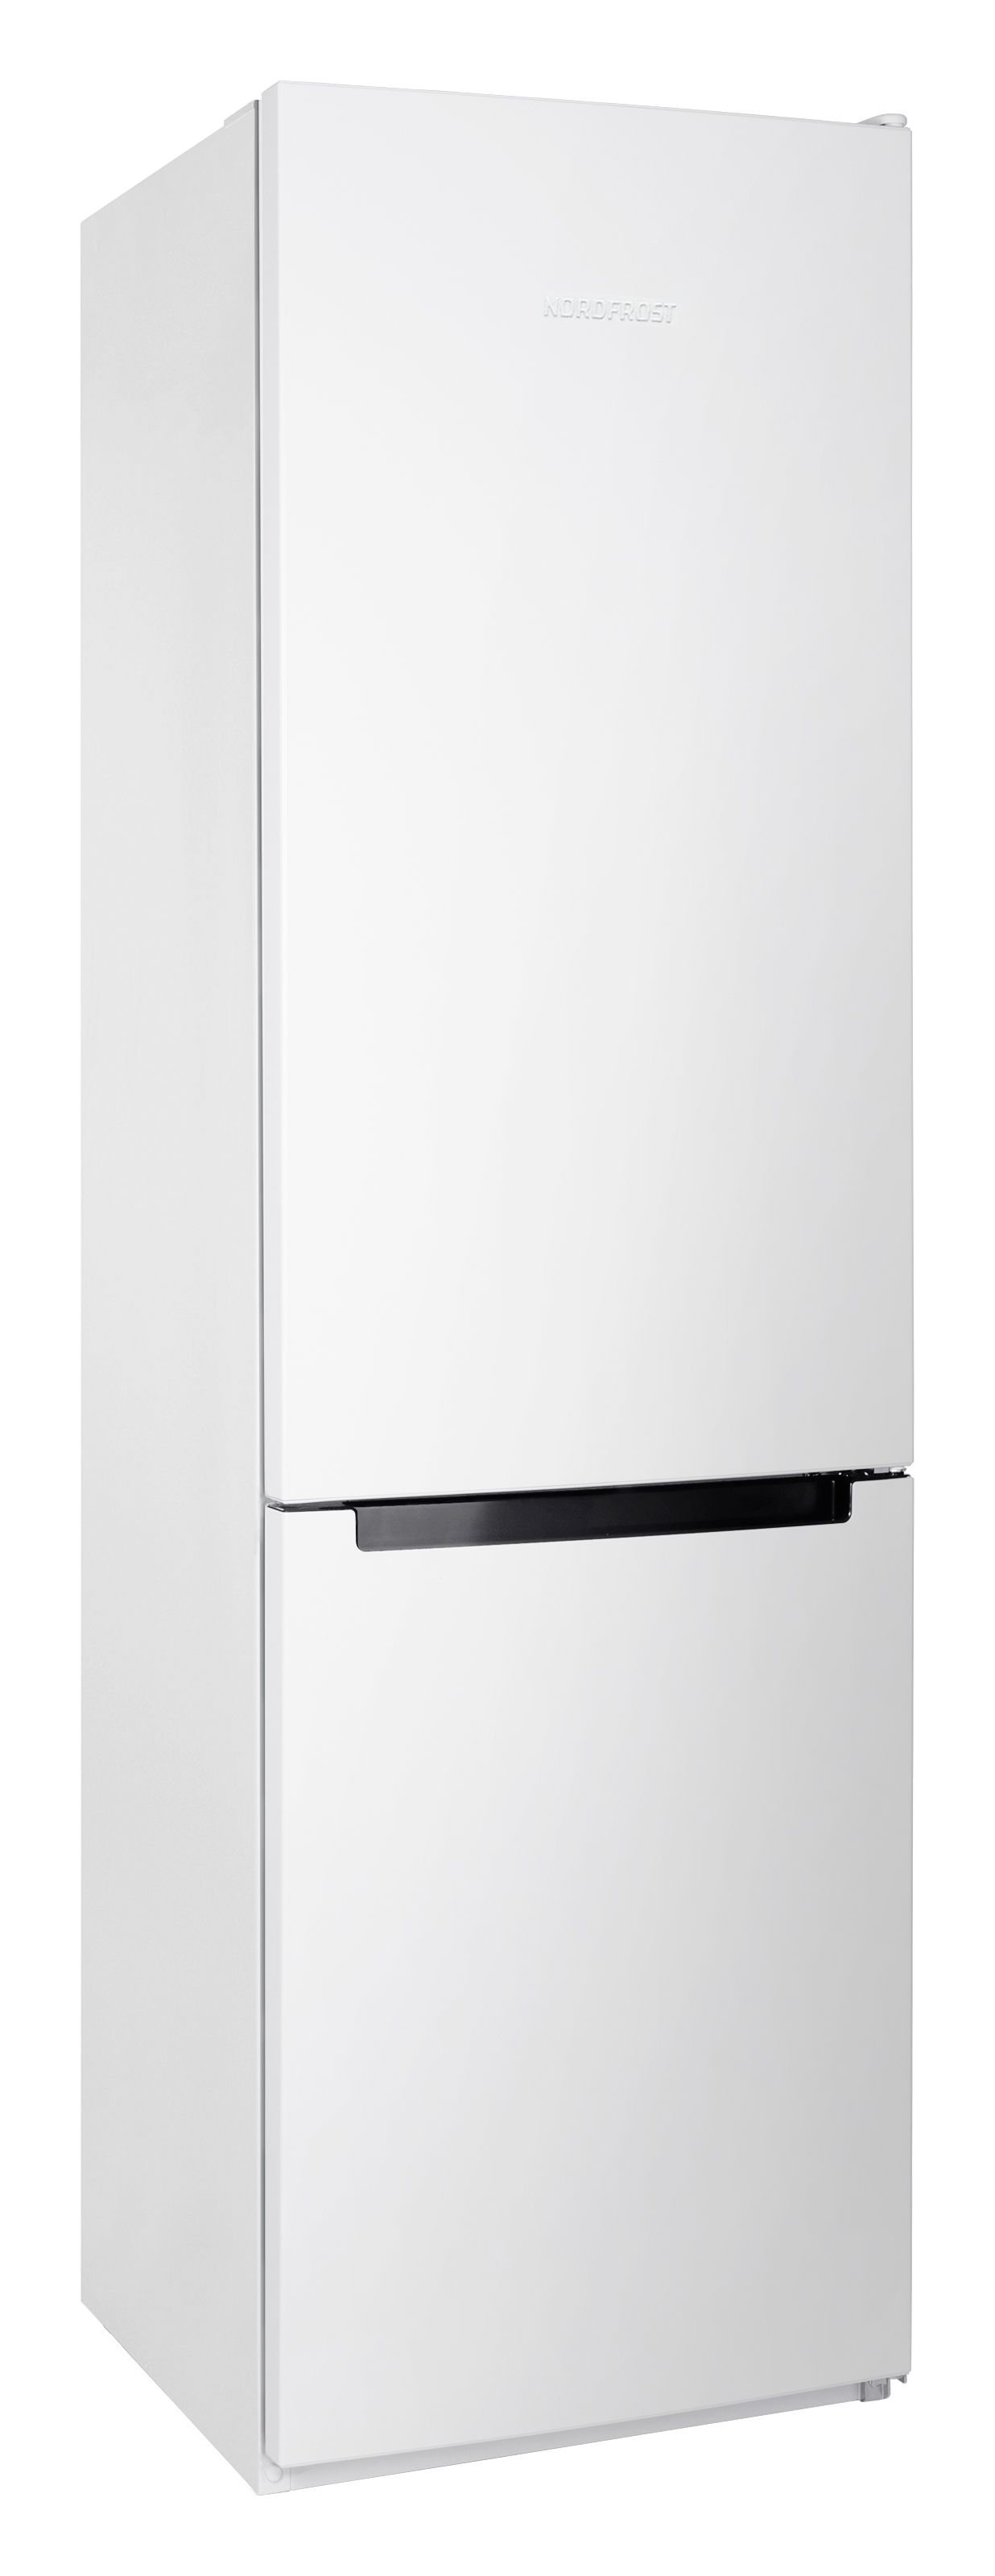 Холодильник NordFrost NRB 154 W белый двухкамерный холодильник nordfrost nrb 151 s